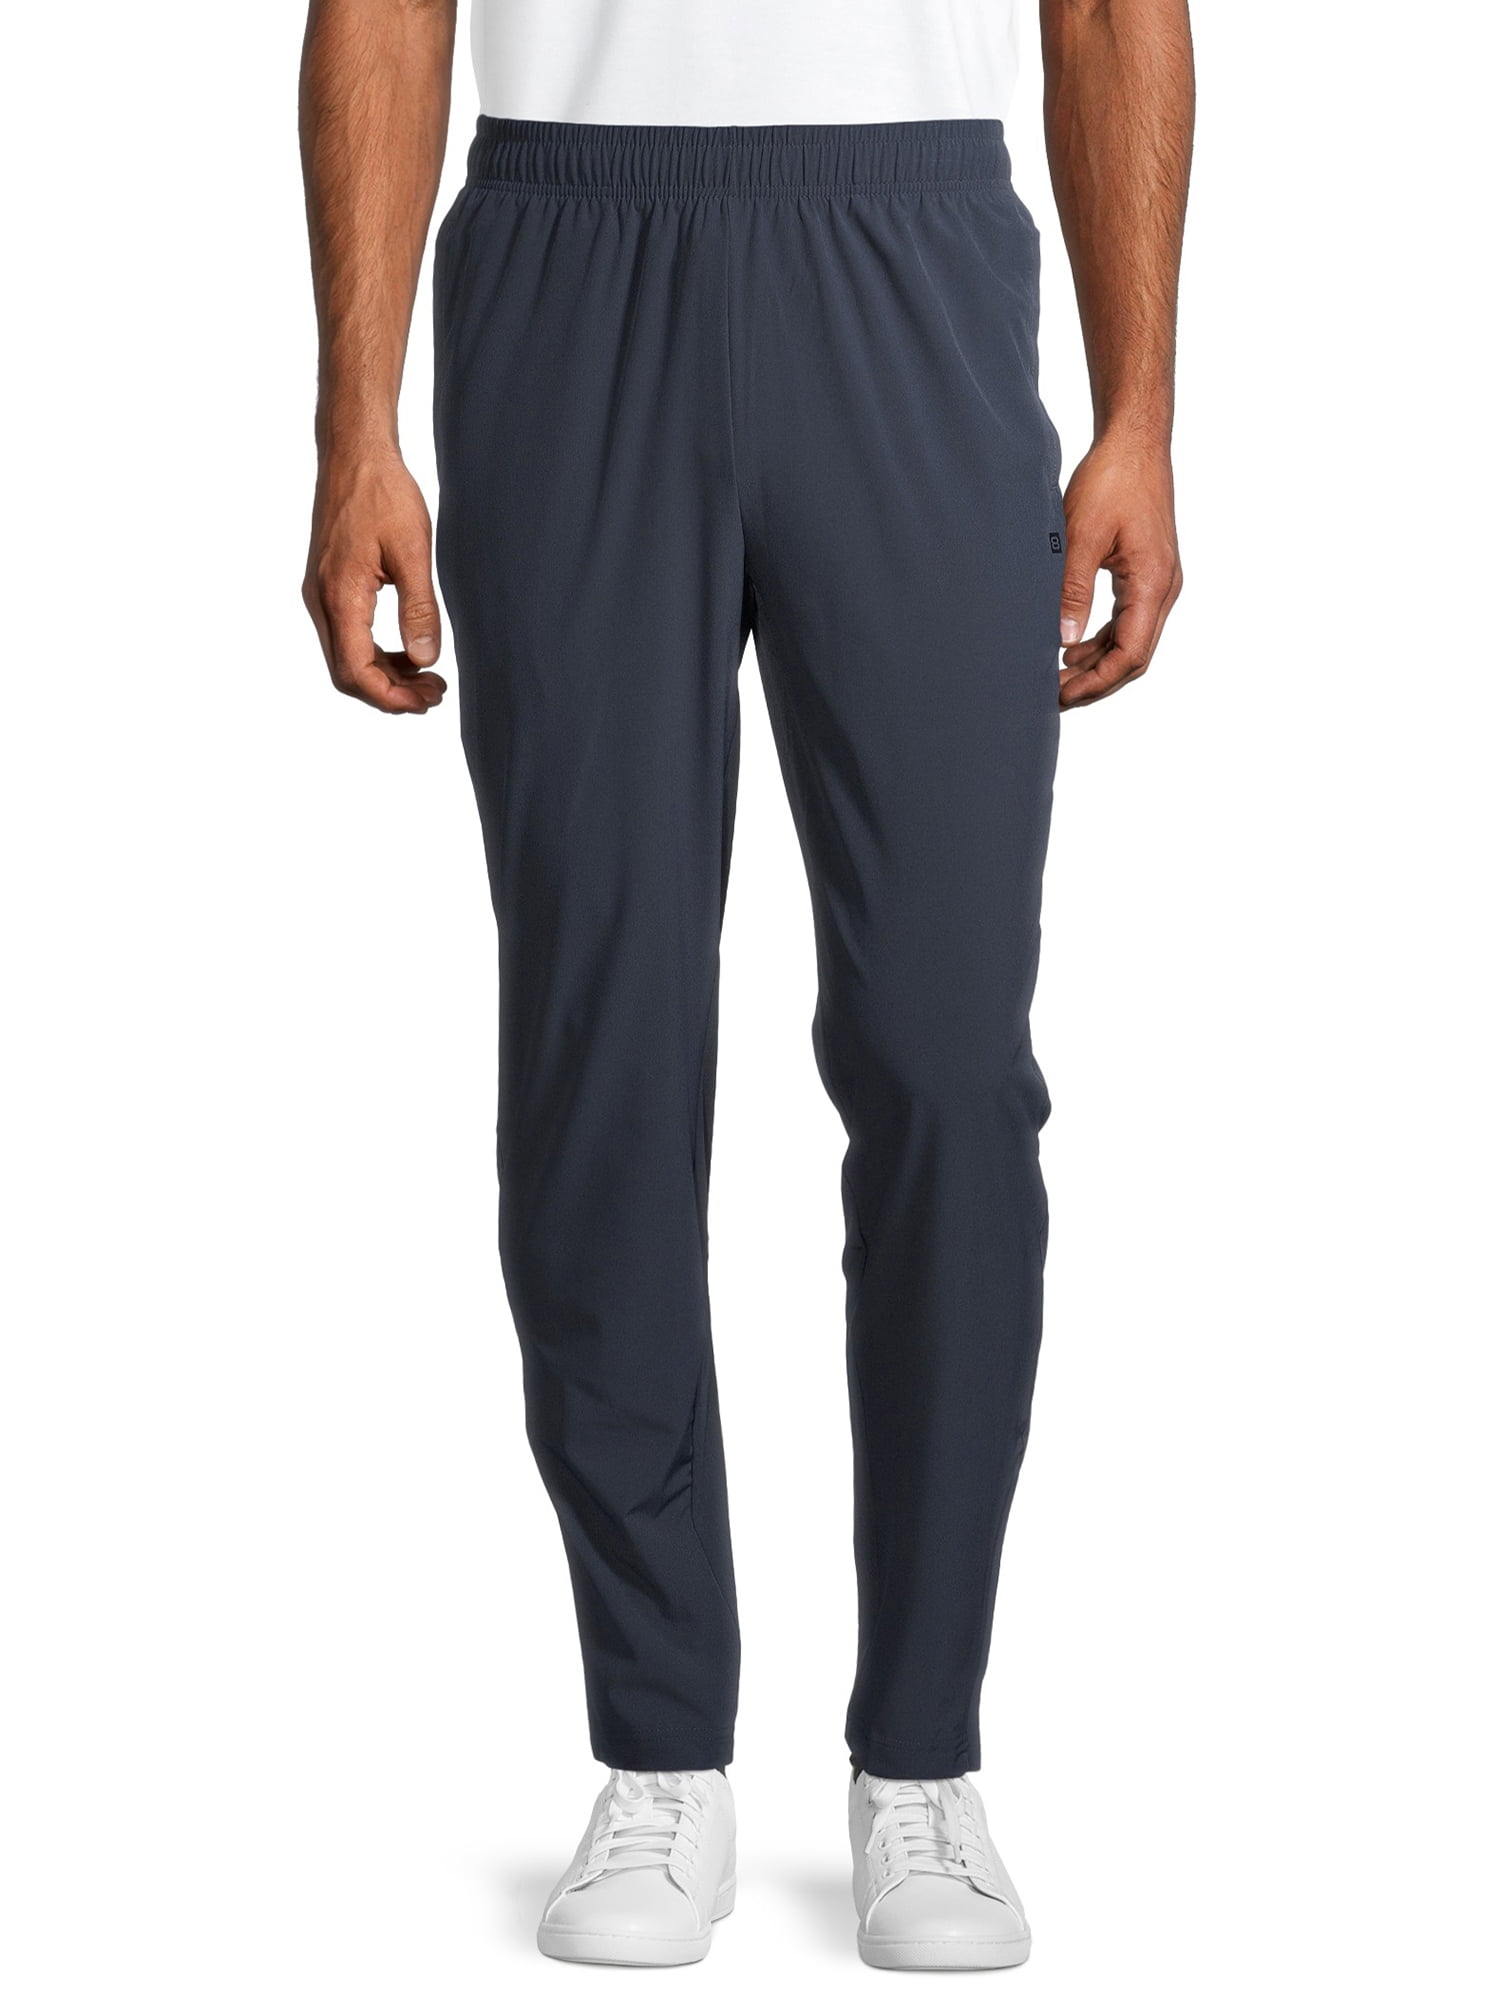 Layer 8 Men's Woven Taper Fit Athletic Pants - Walmart.com